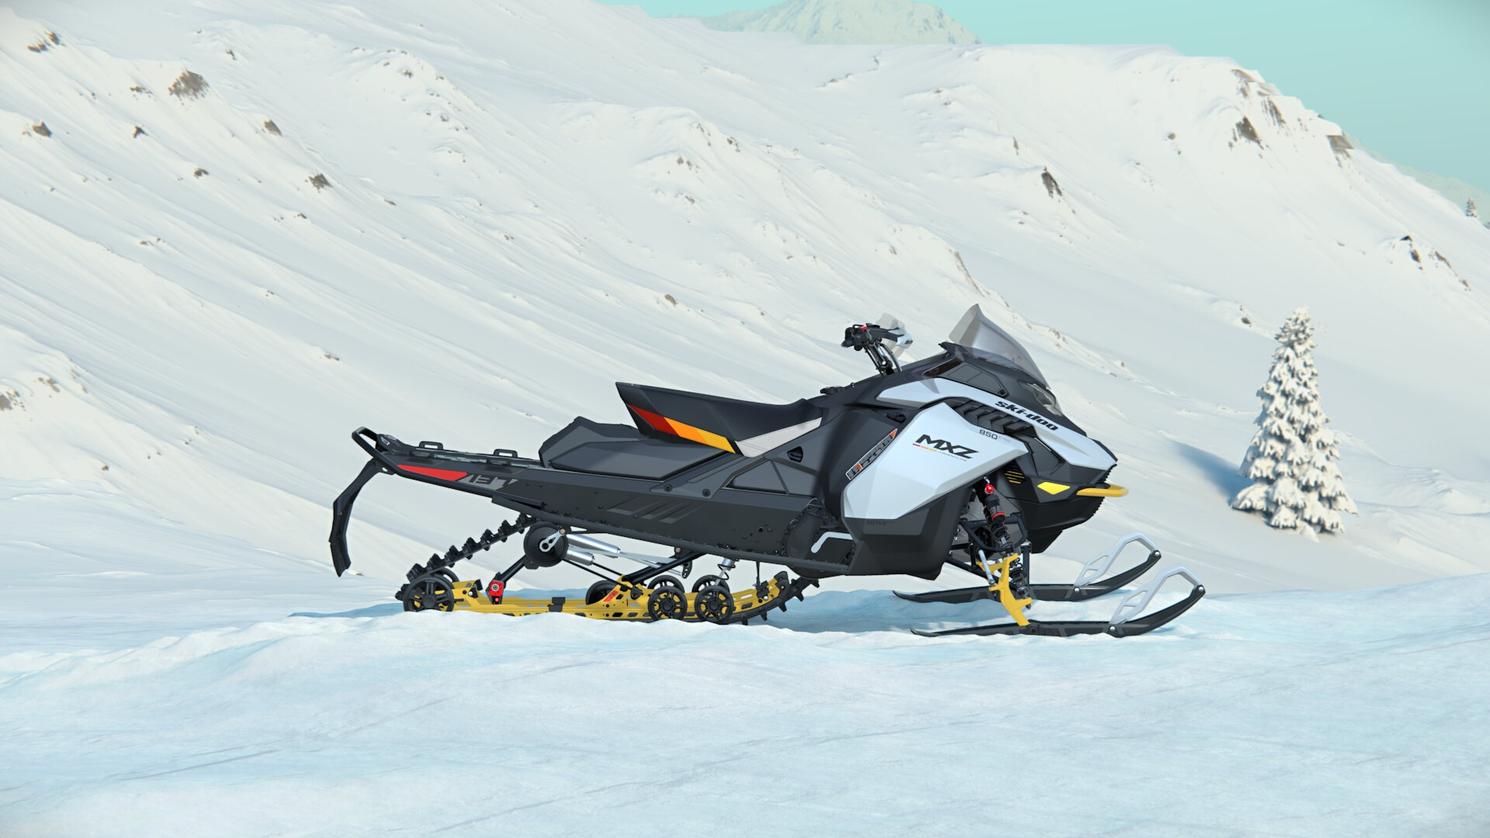 2024 Ski-Doo MXZ Adrenaline ens. Blizzard - UDRD